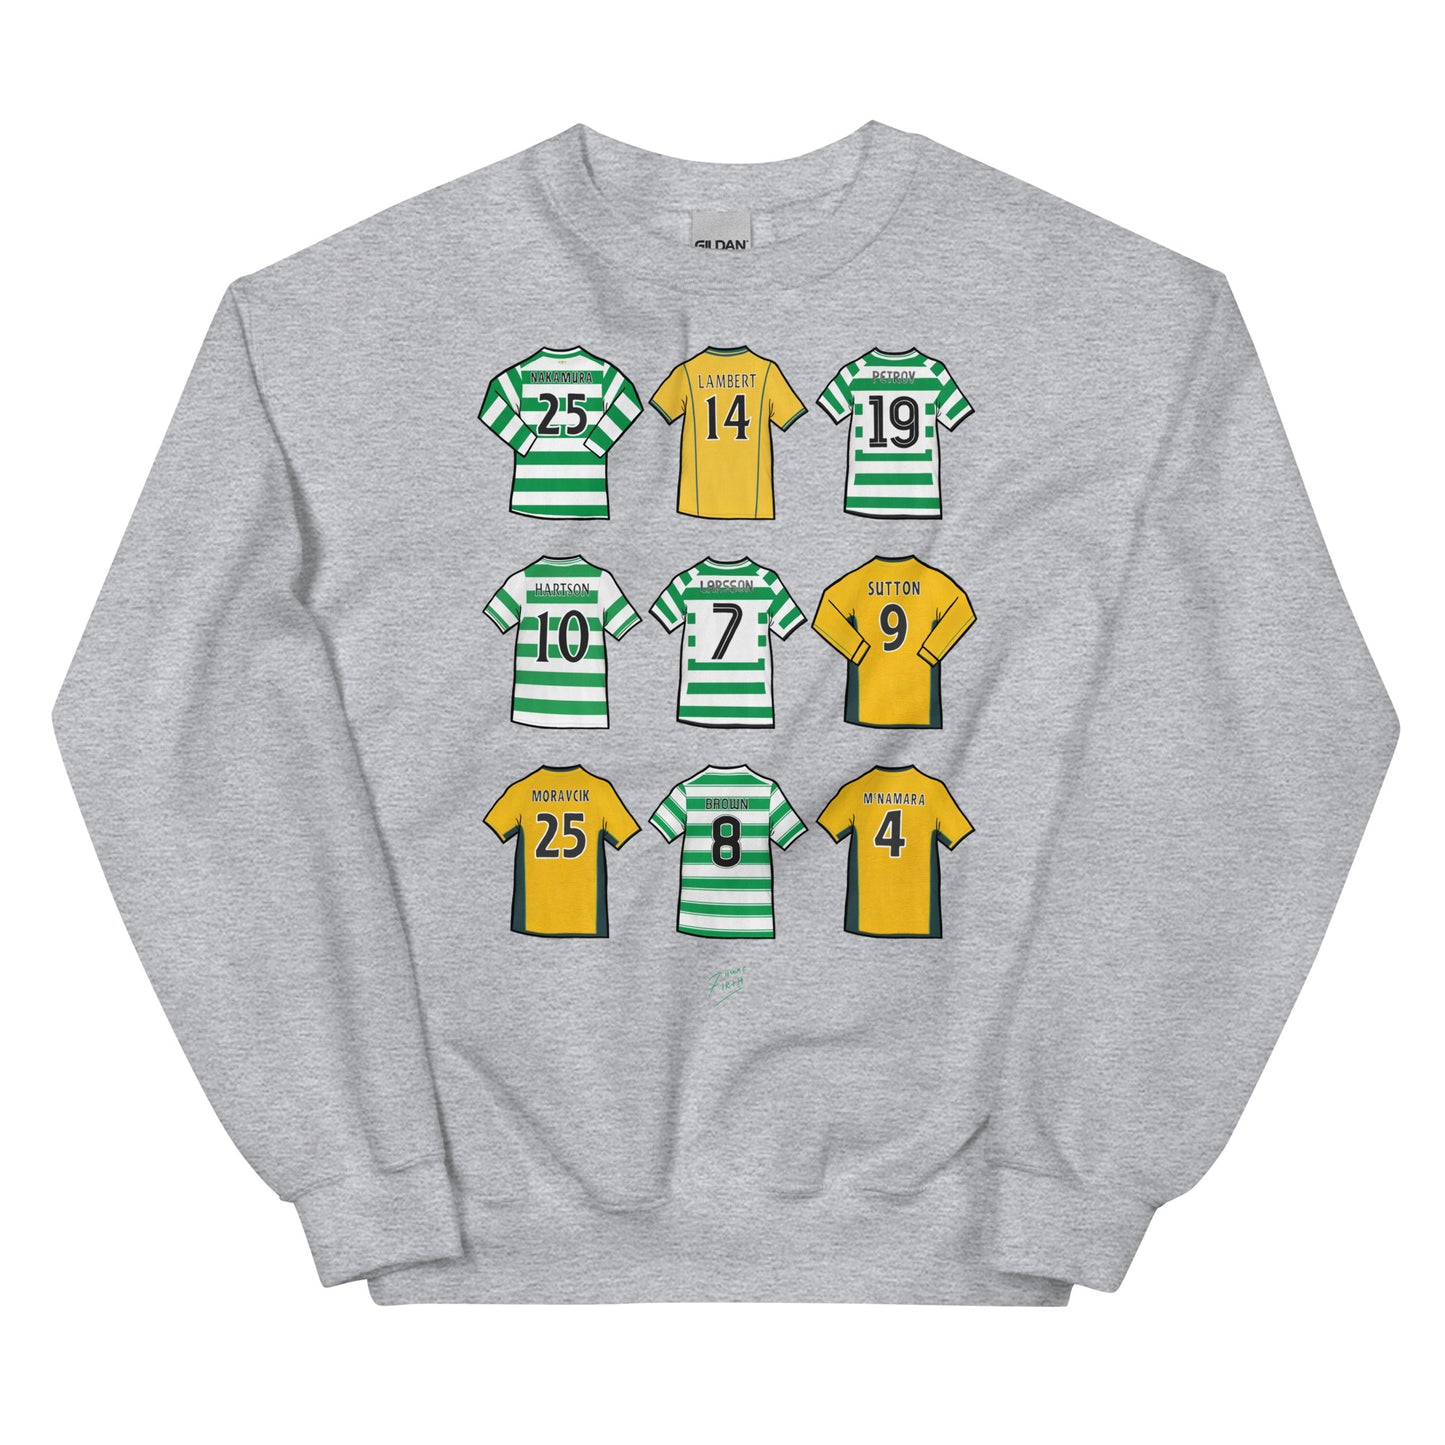 Grey Sweatshirt Celtic inspired, legends of the club illustrated artwork featuring names such as Nakamura, Chris Sutton, John Harrison, Henrik Larsson, Scott Brown & more